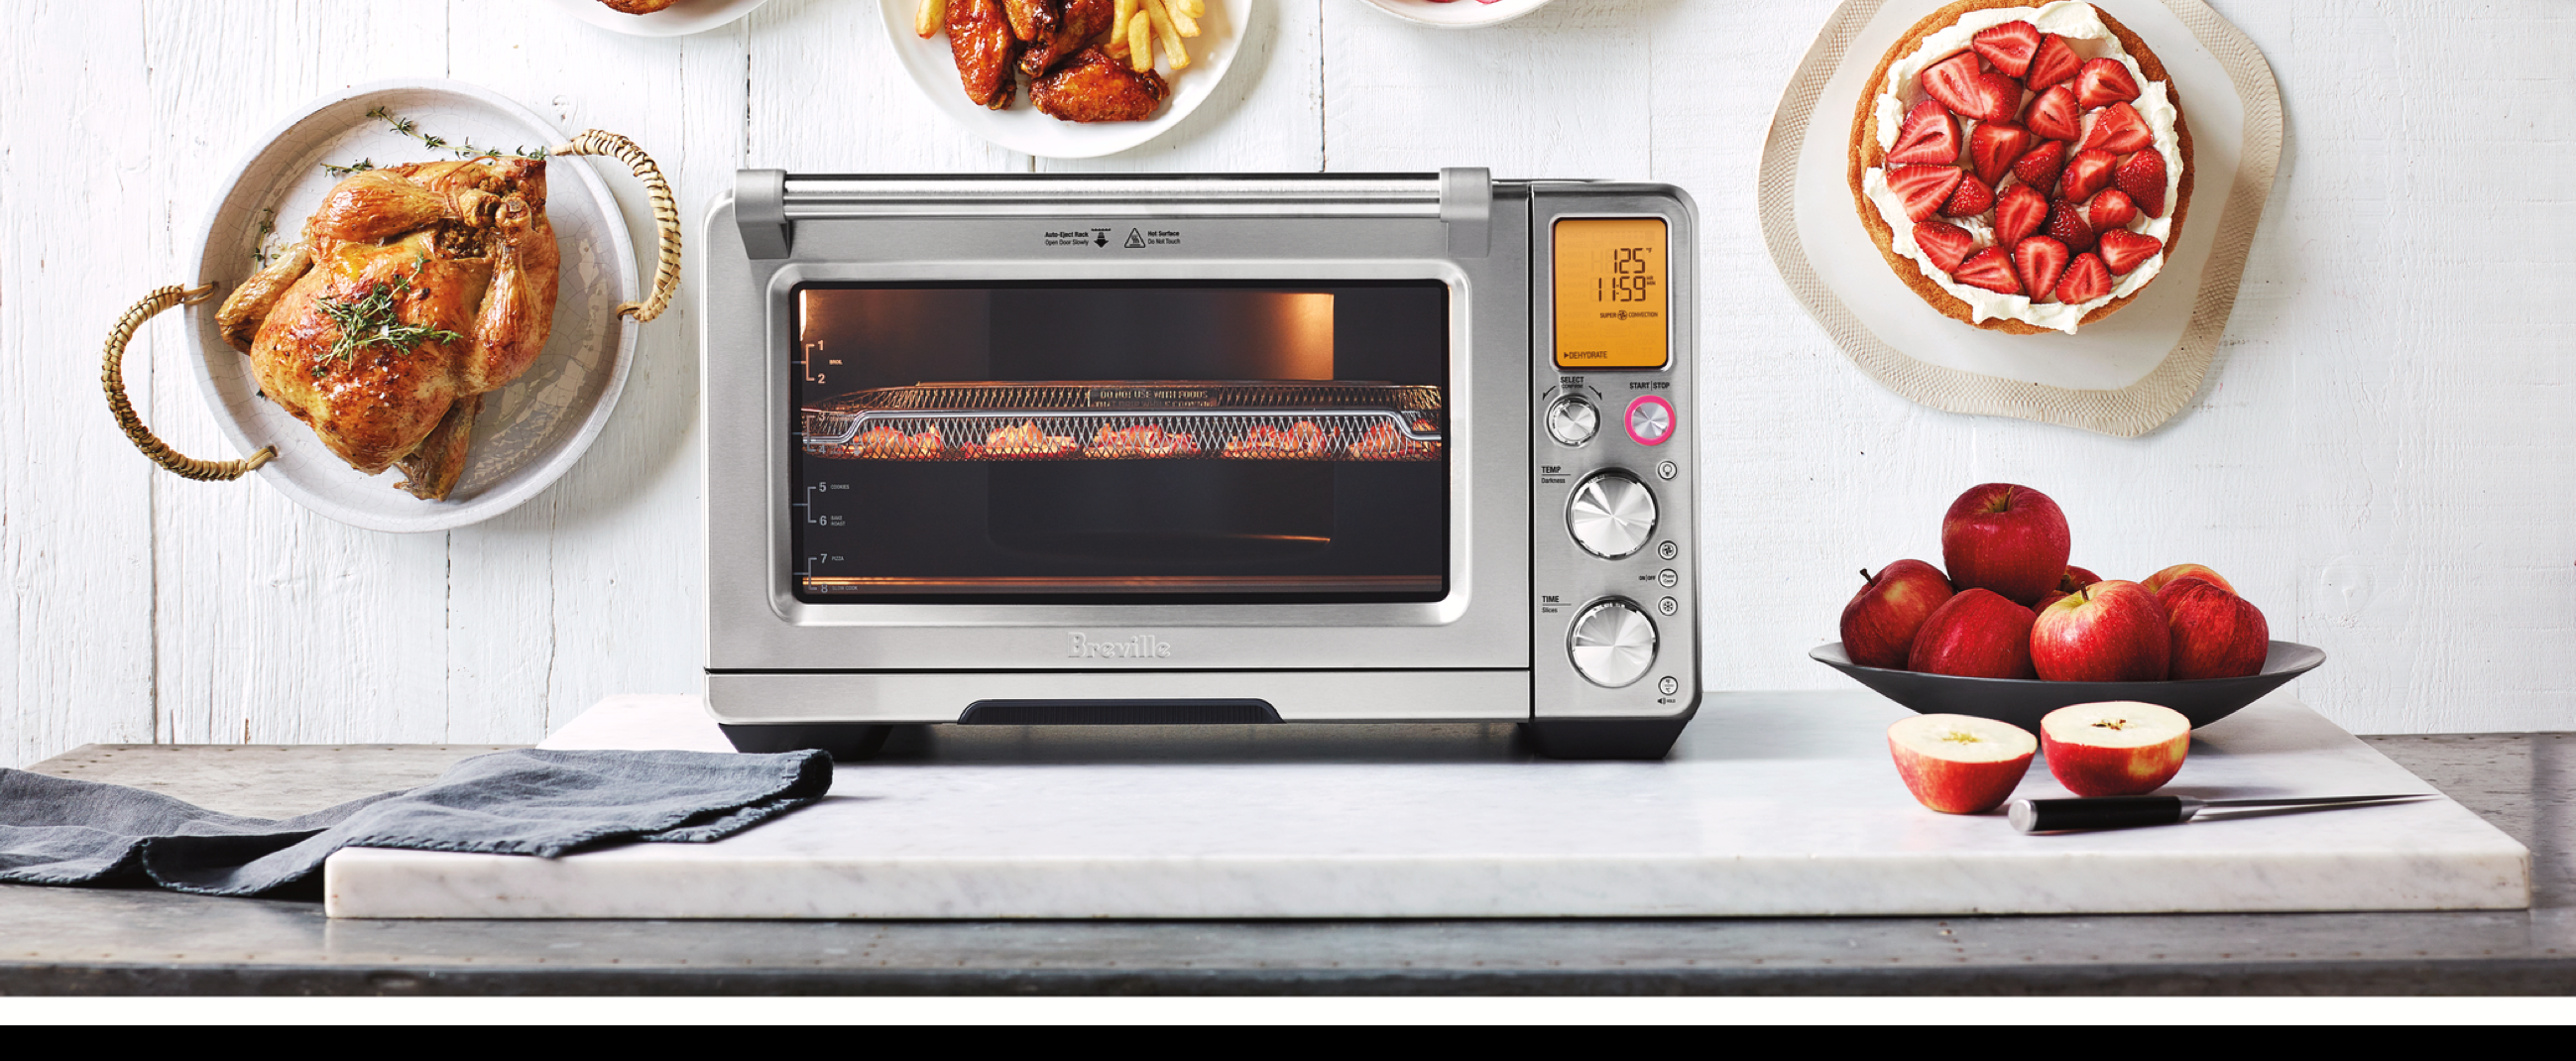 Breville Toaster Oven Comparison Chart